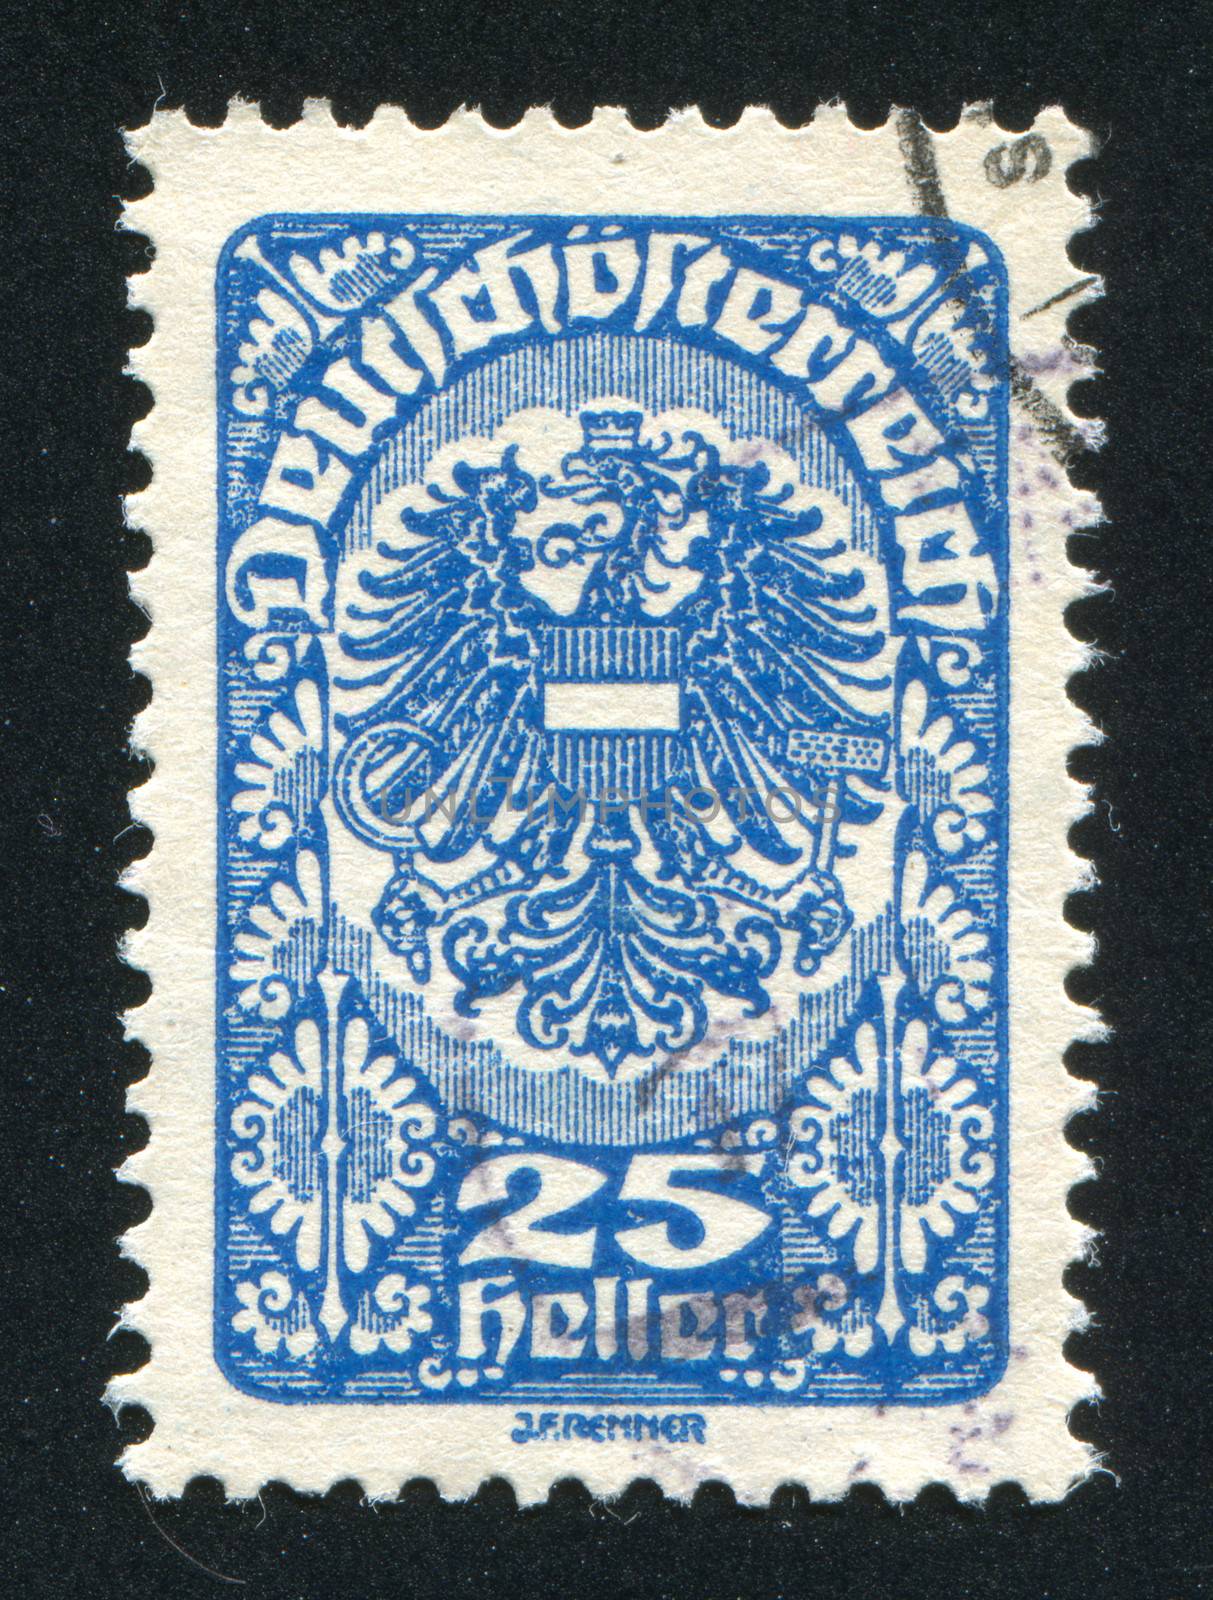 AUSTRIA - CIRCA 1920: stamp printed by Austria, shows ornament and eagle, circa 1920